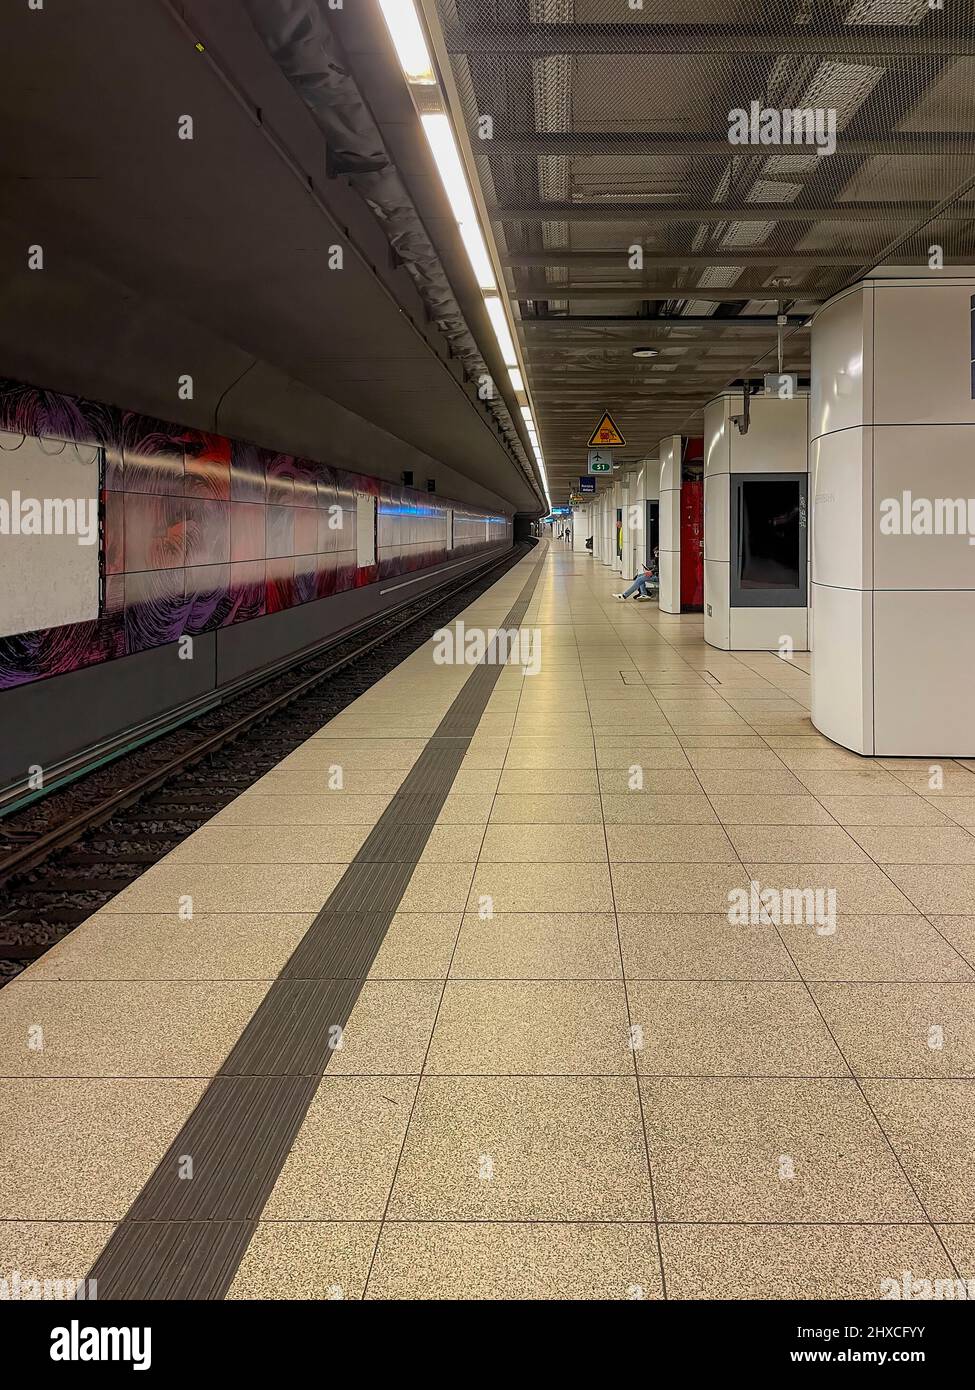 Station de métro, Reeperbahn, Hambourg, Allemagne, Europe Banque D'Images